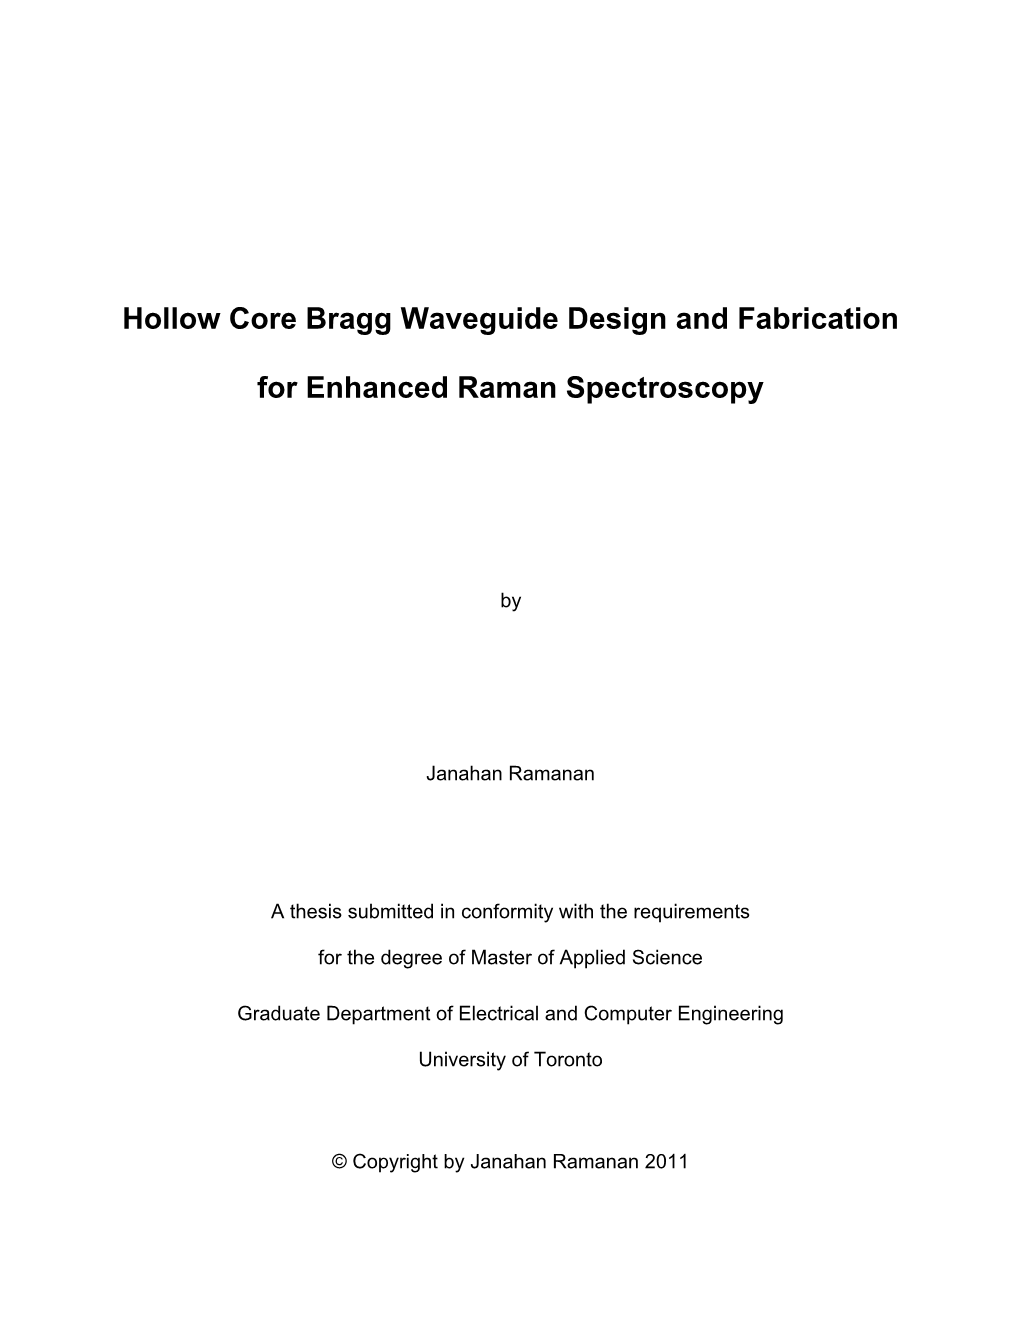 Hollow Core Bragg Waveguide Design and Fabrication for Enhanced Raman Spectroscopy